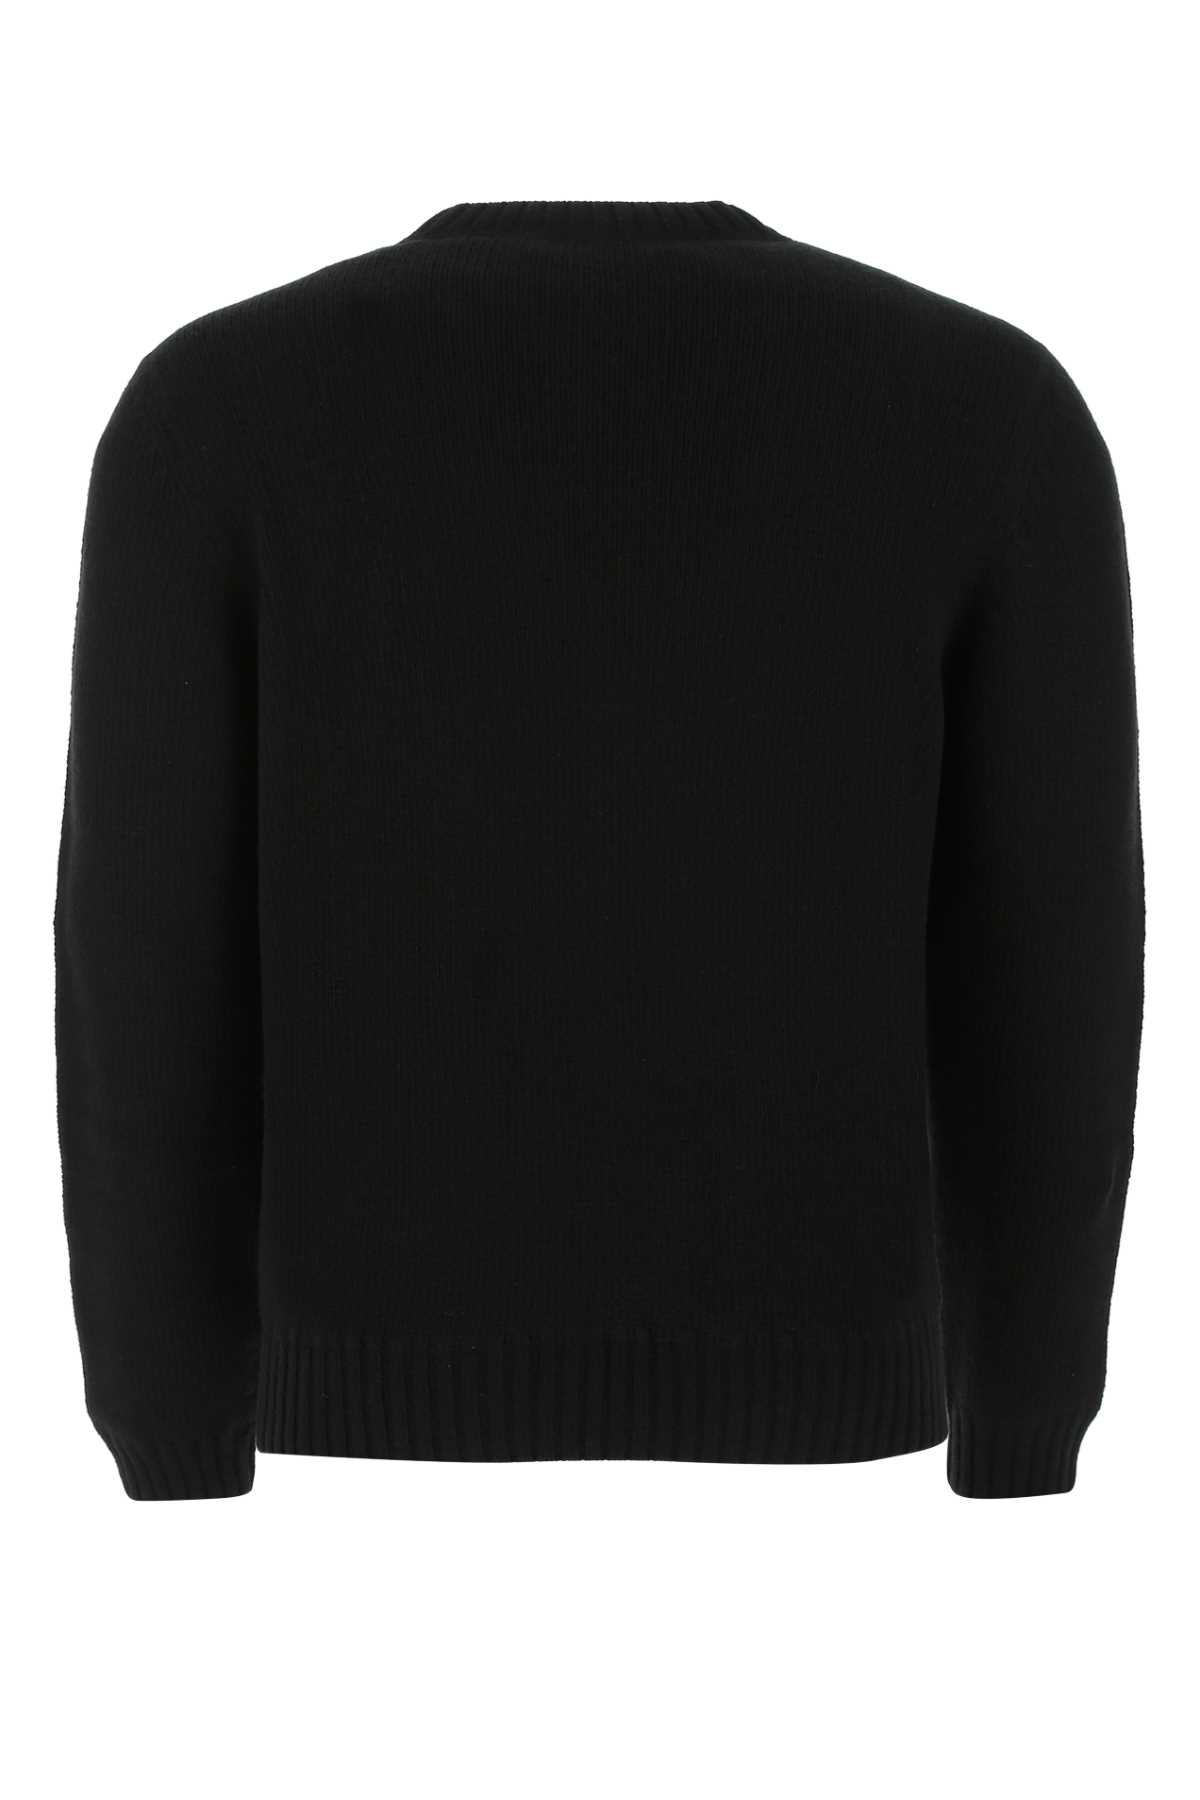 Prada Black Wool Blend Sweater In F0002